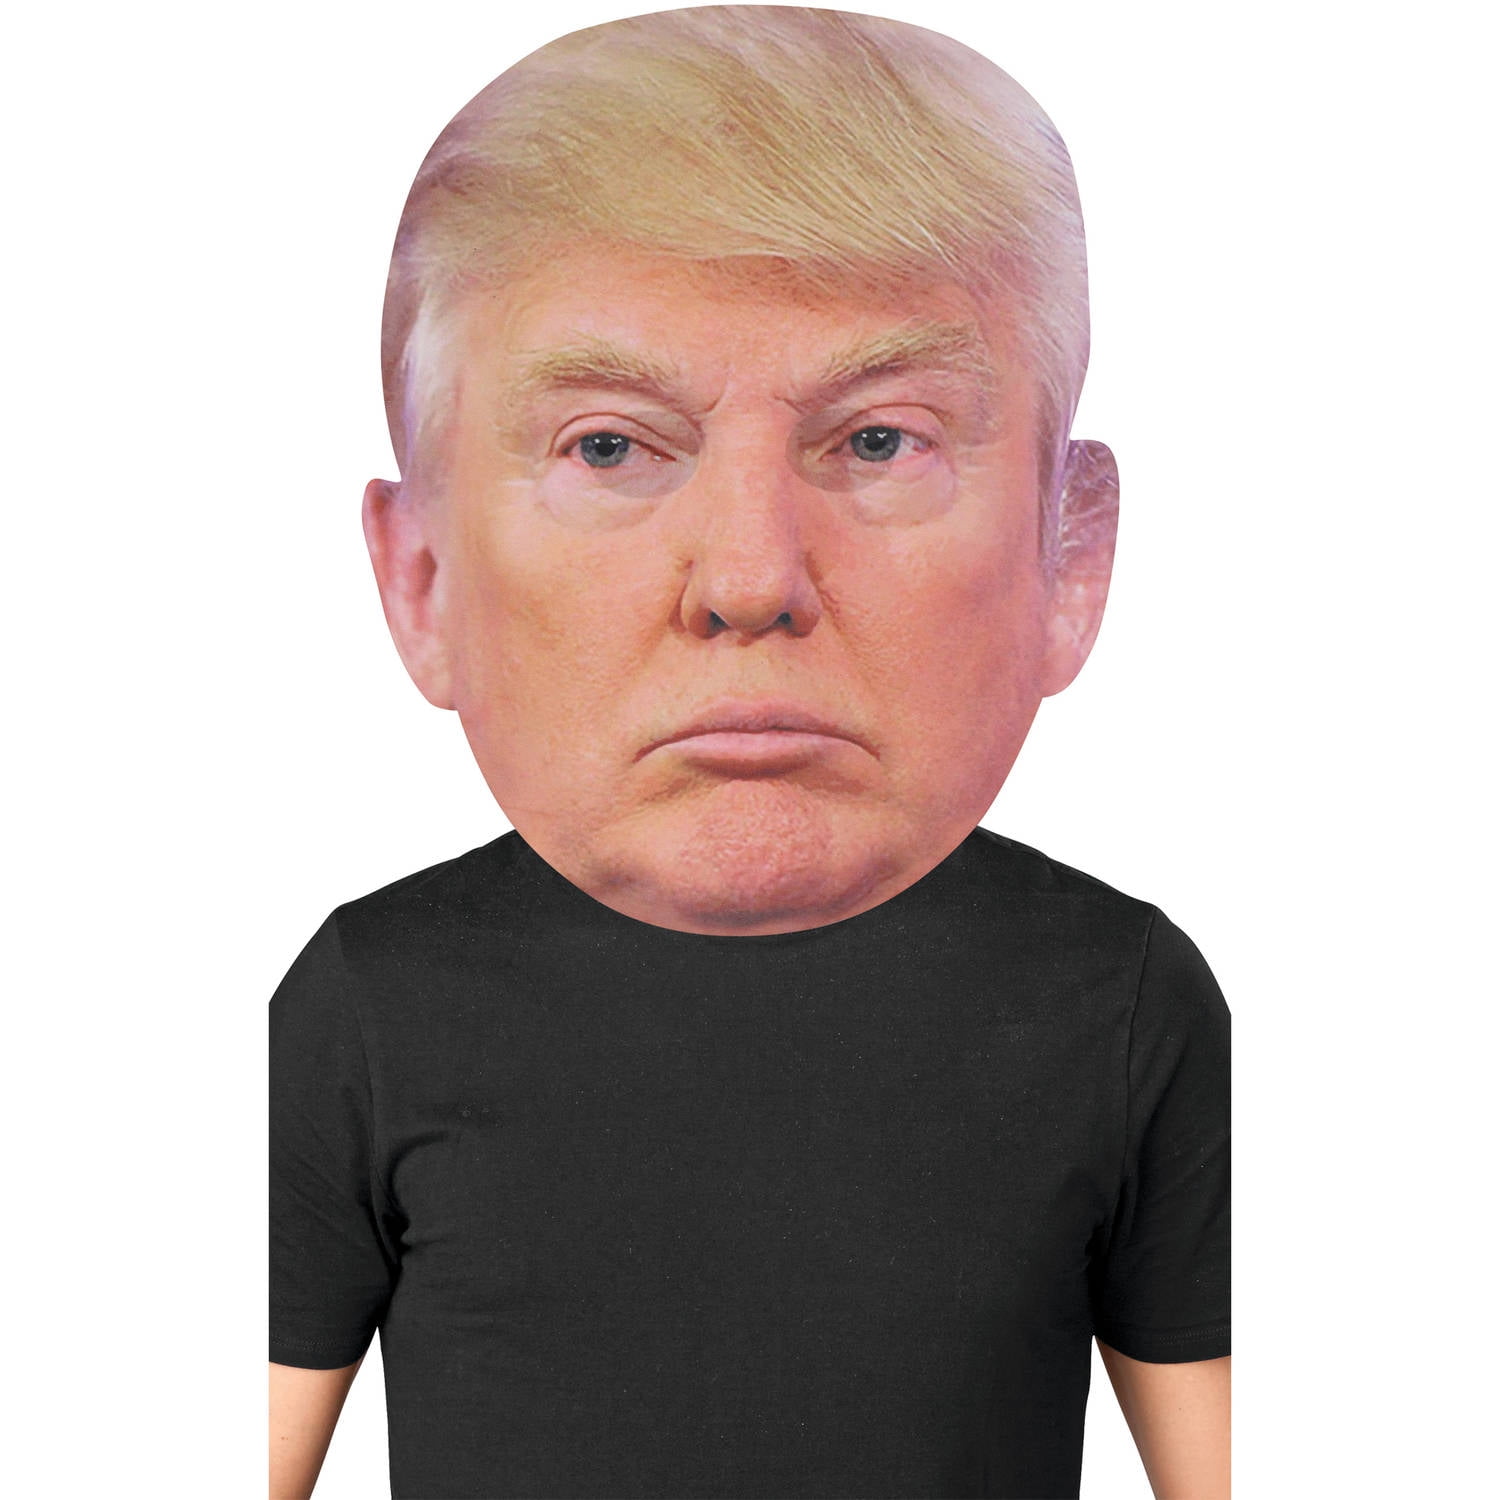 Trump Giant Mask Adult Accessory - Walmart.com